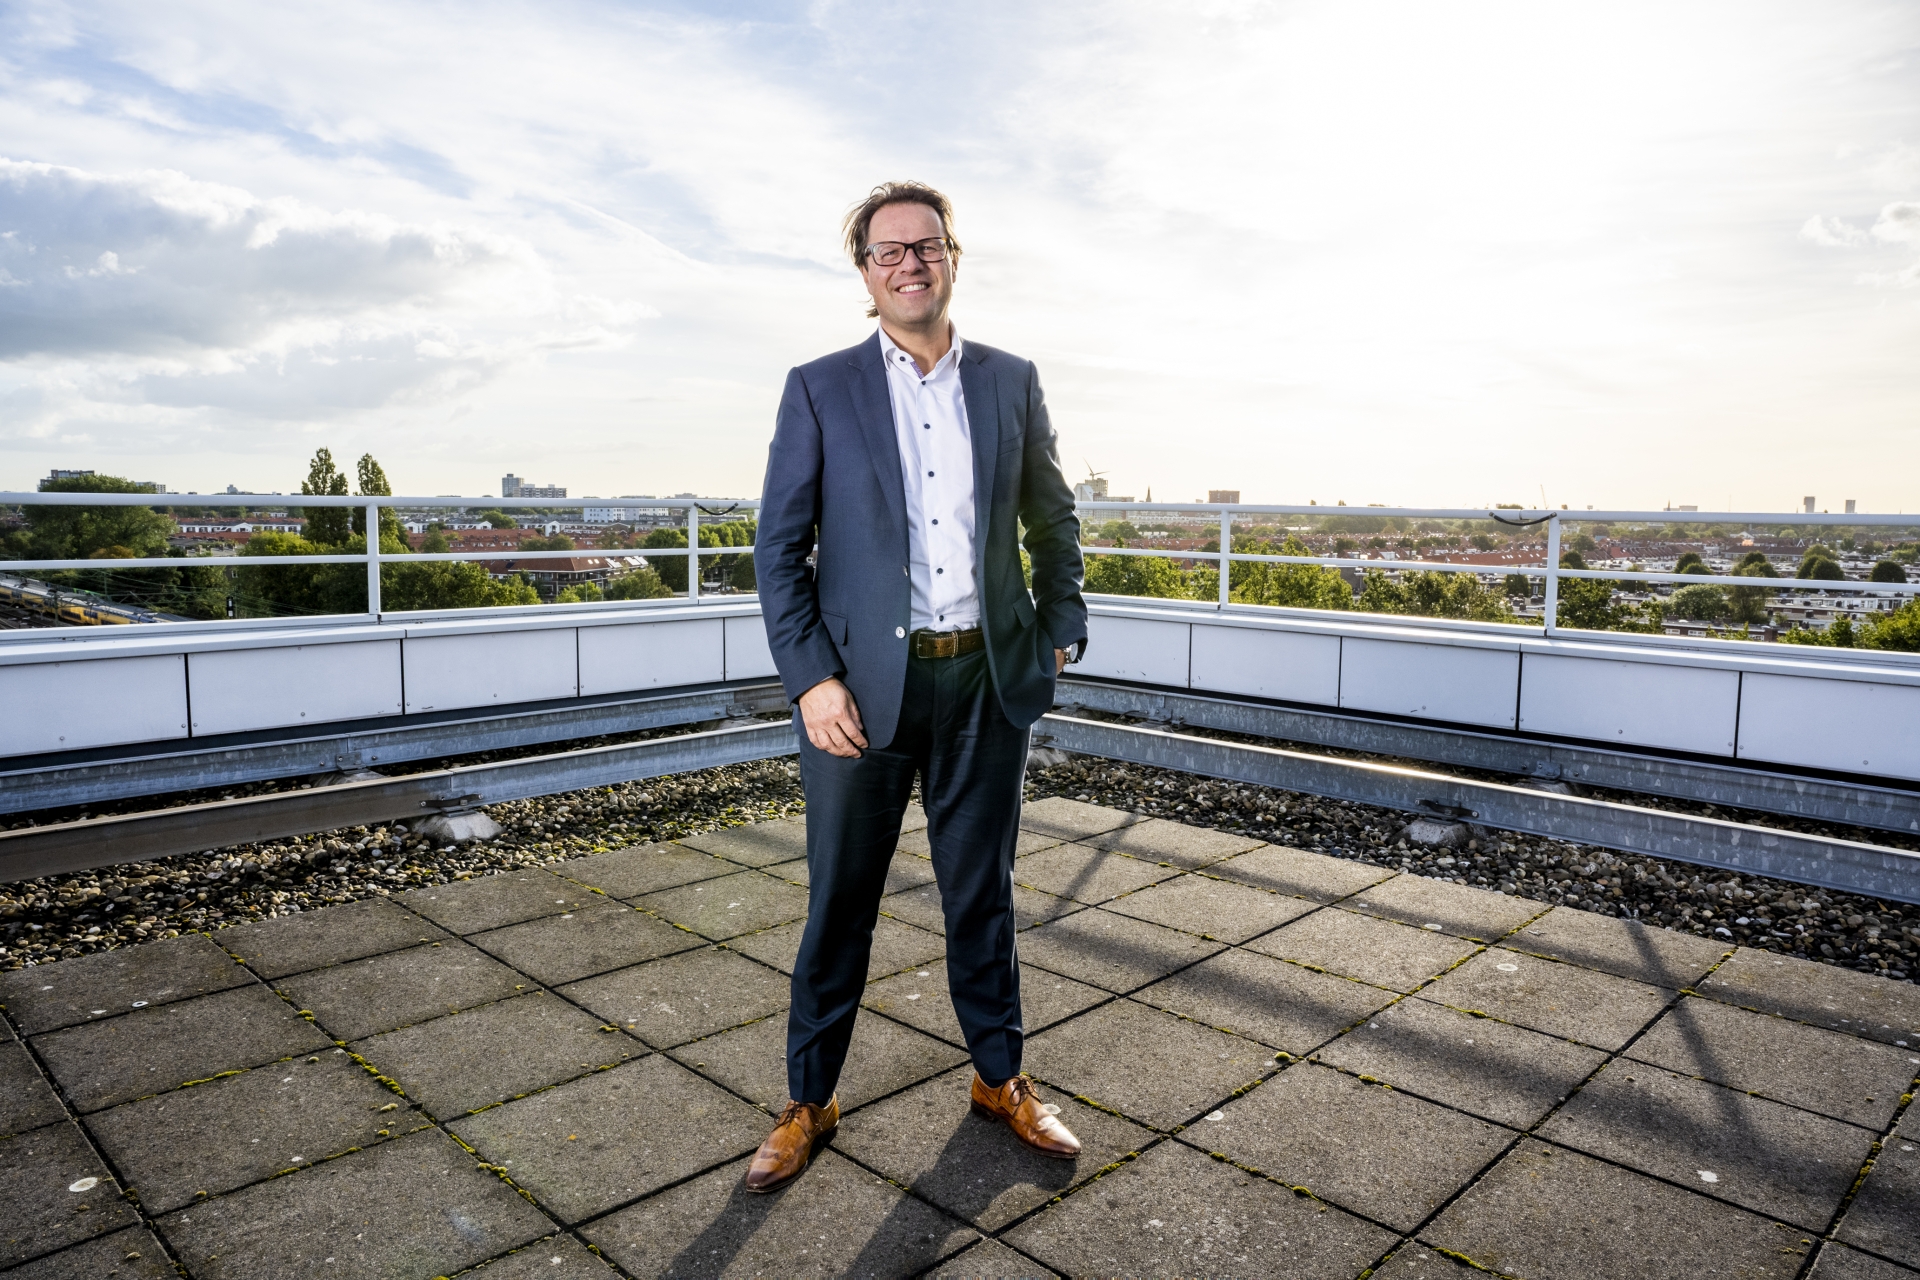 Joris den Bruinen: "HSD Wants More Collaboration within the Chain"